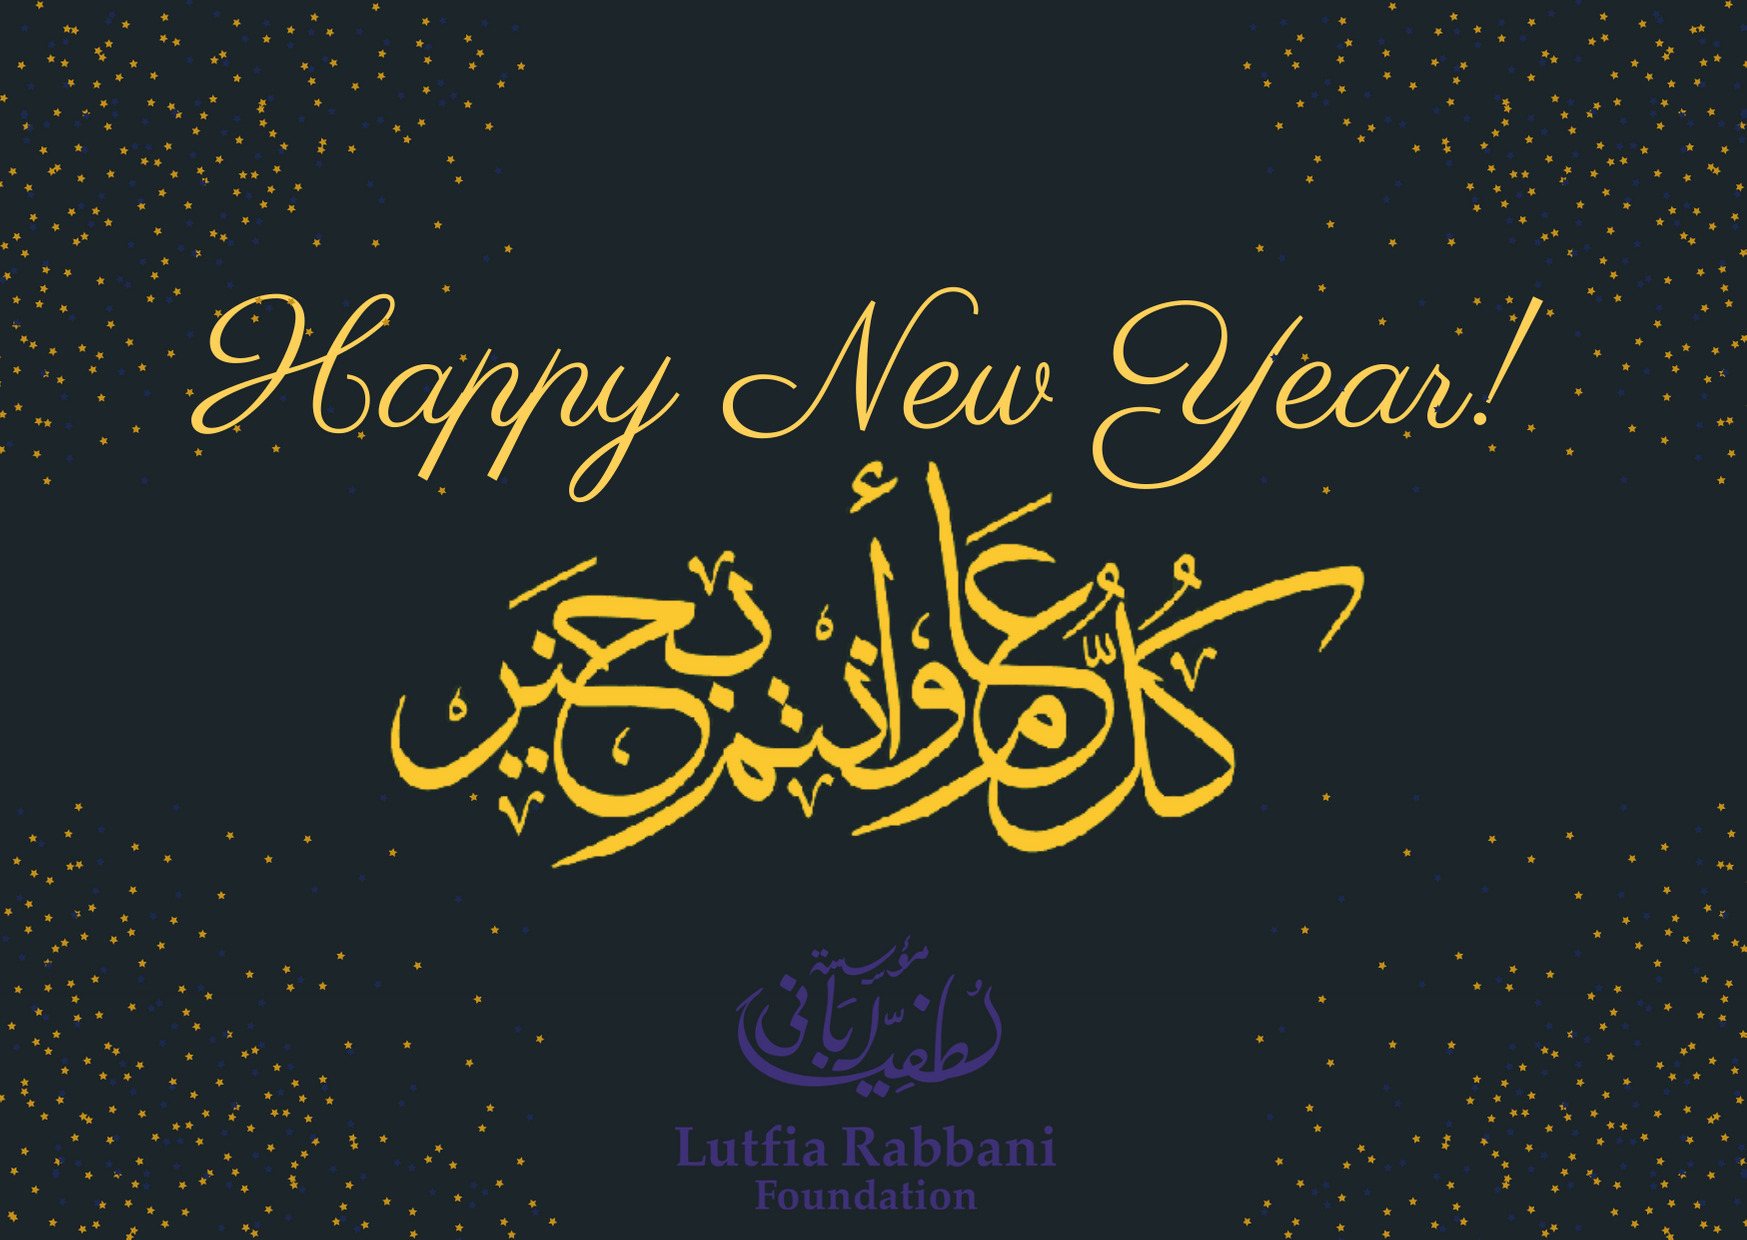 Happy New Year from the Lutfia Rabbani Foundation!